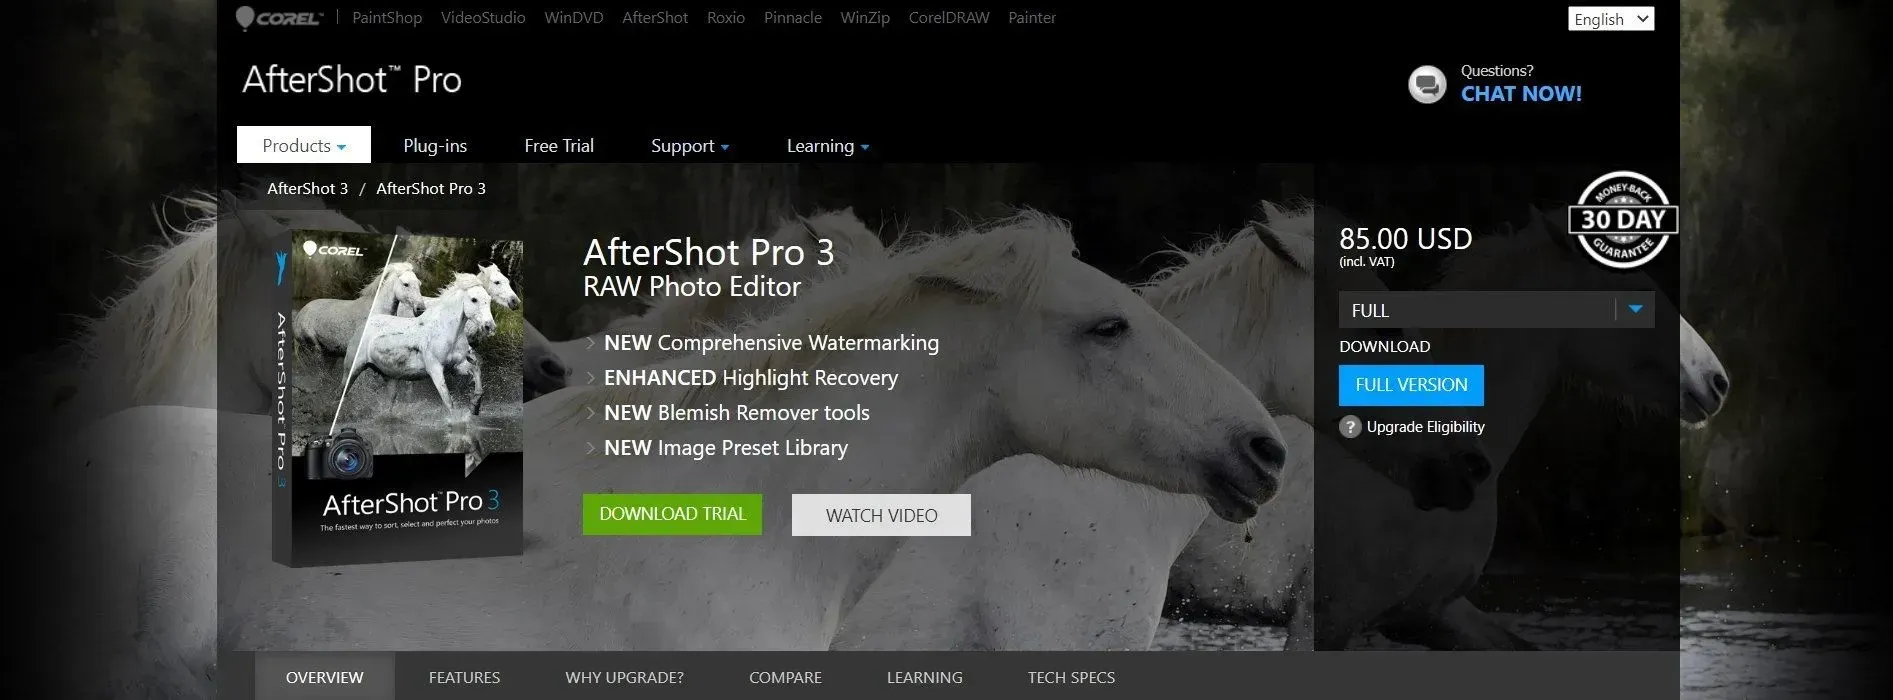 Corel AfterShot 3 interface